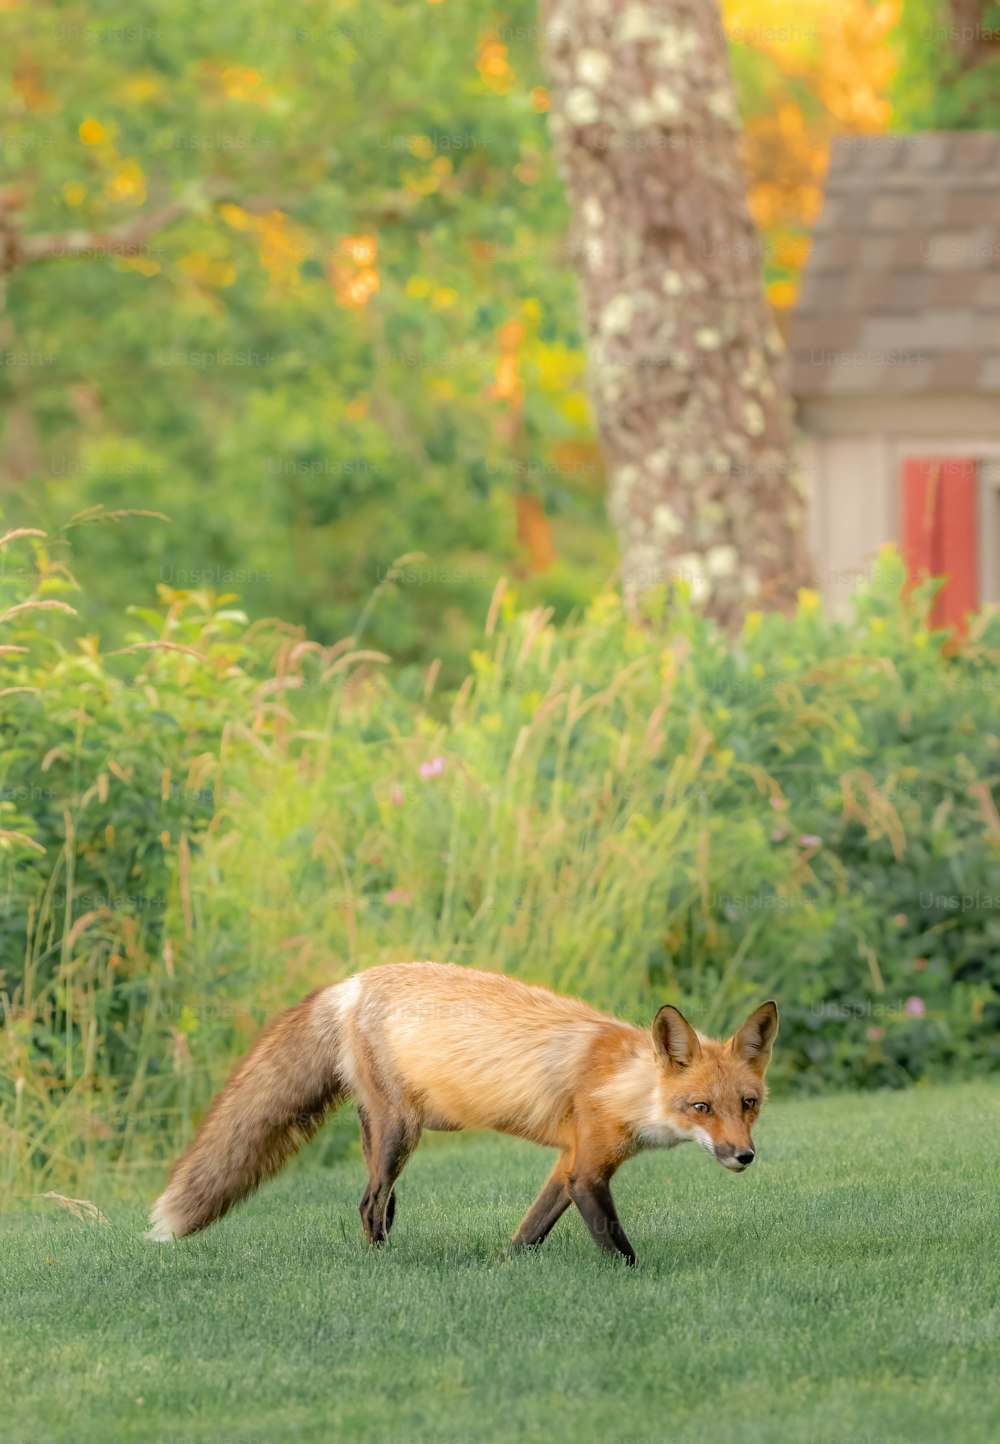 a red fox walking across a lush green field